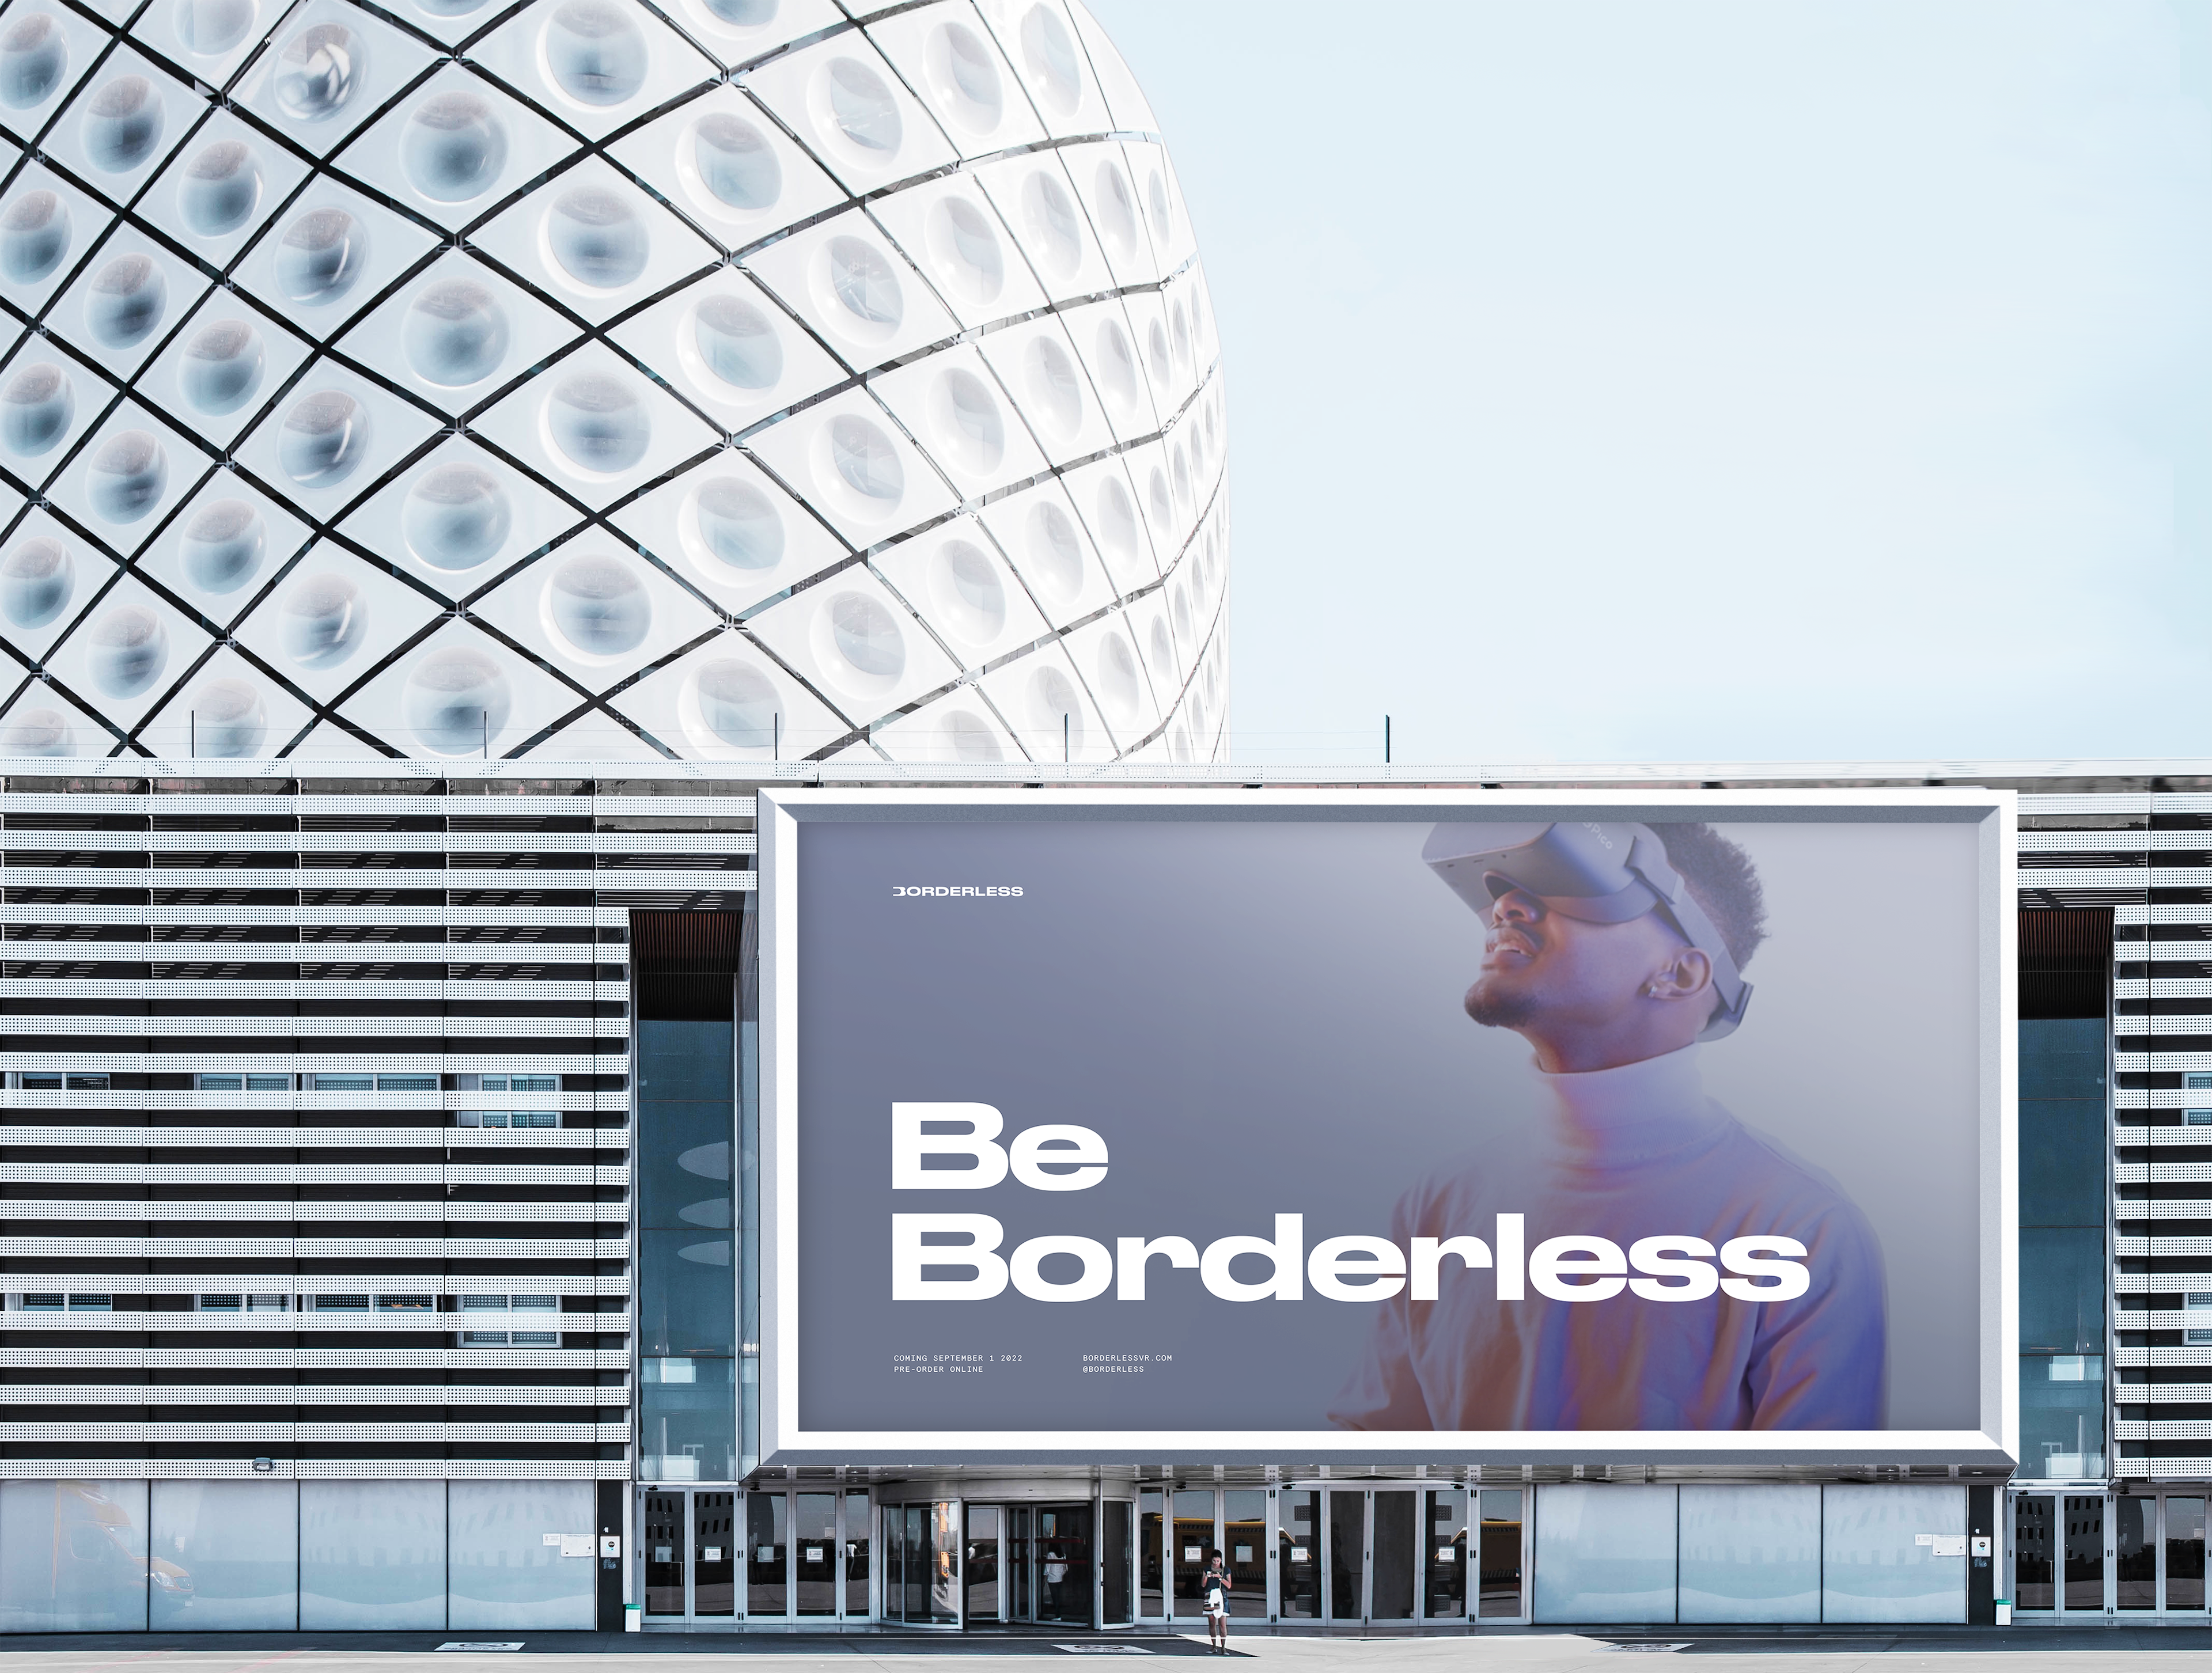 Large Borderless billboard that says Be Borderless